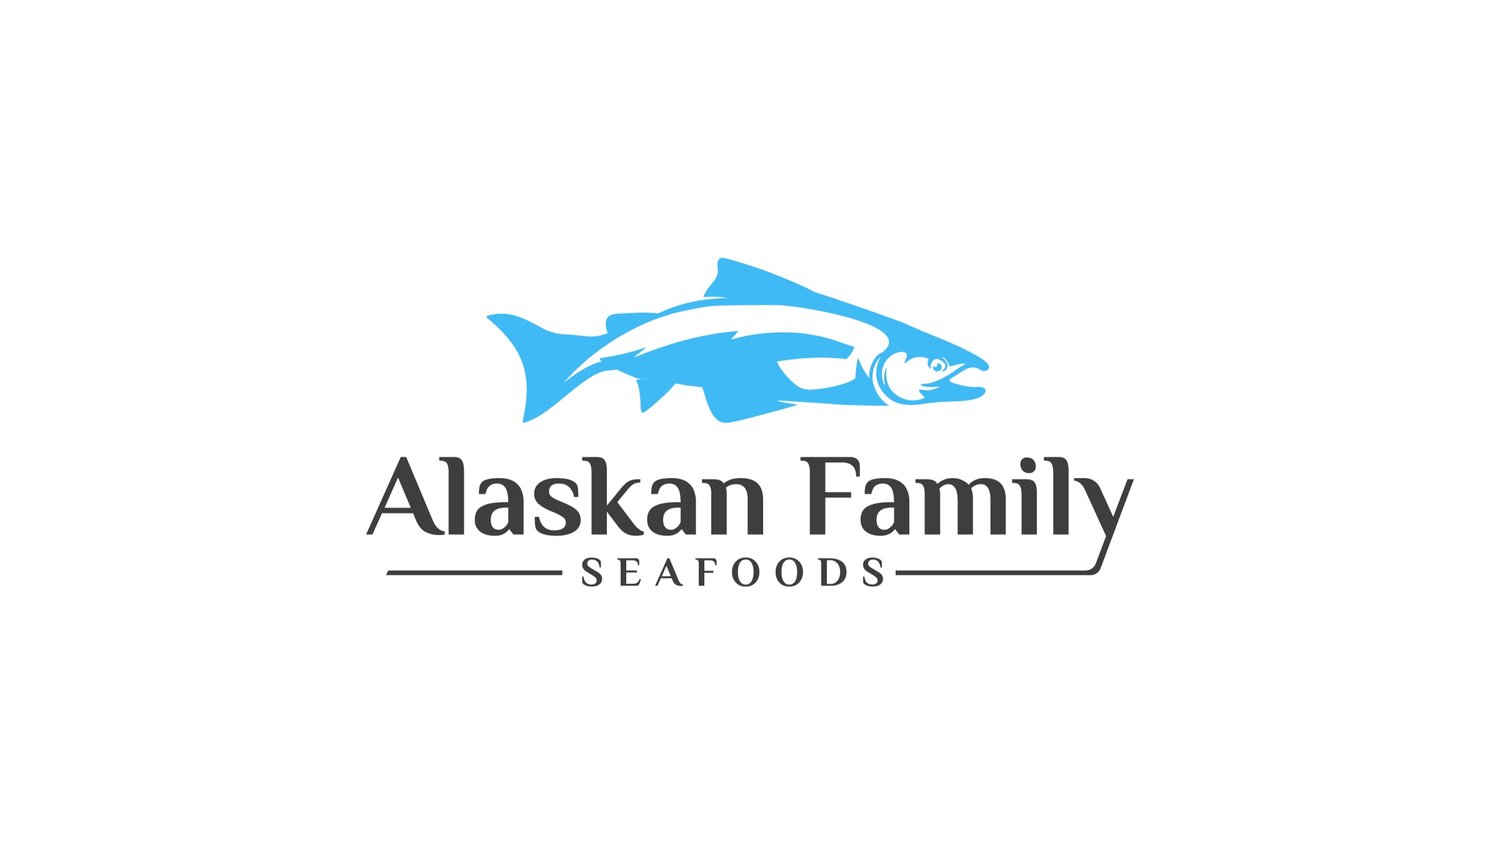 Alaskan Family Seafoods